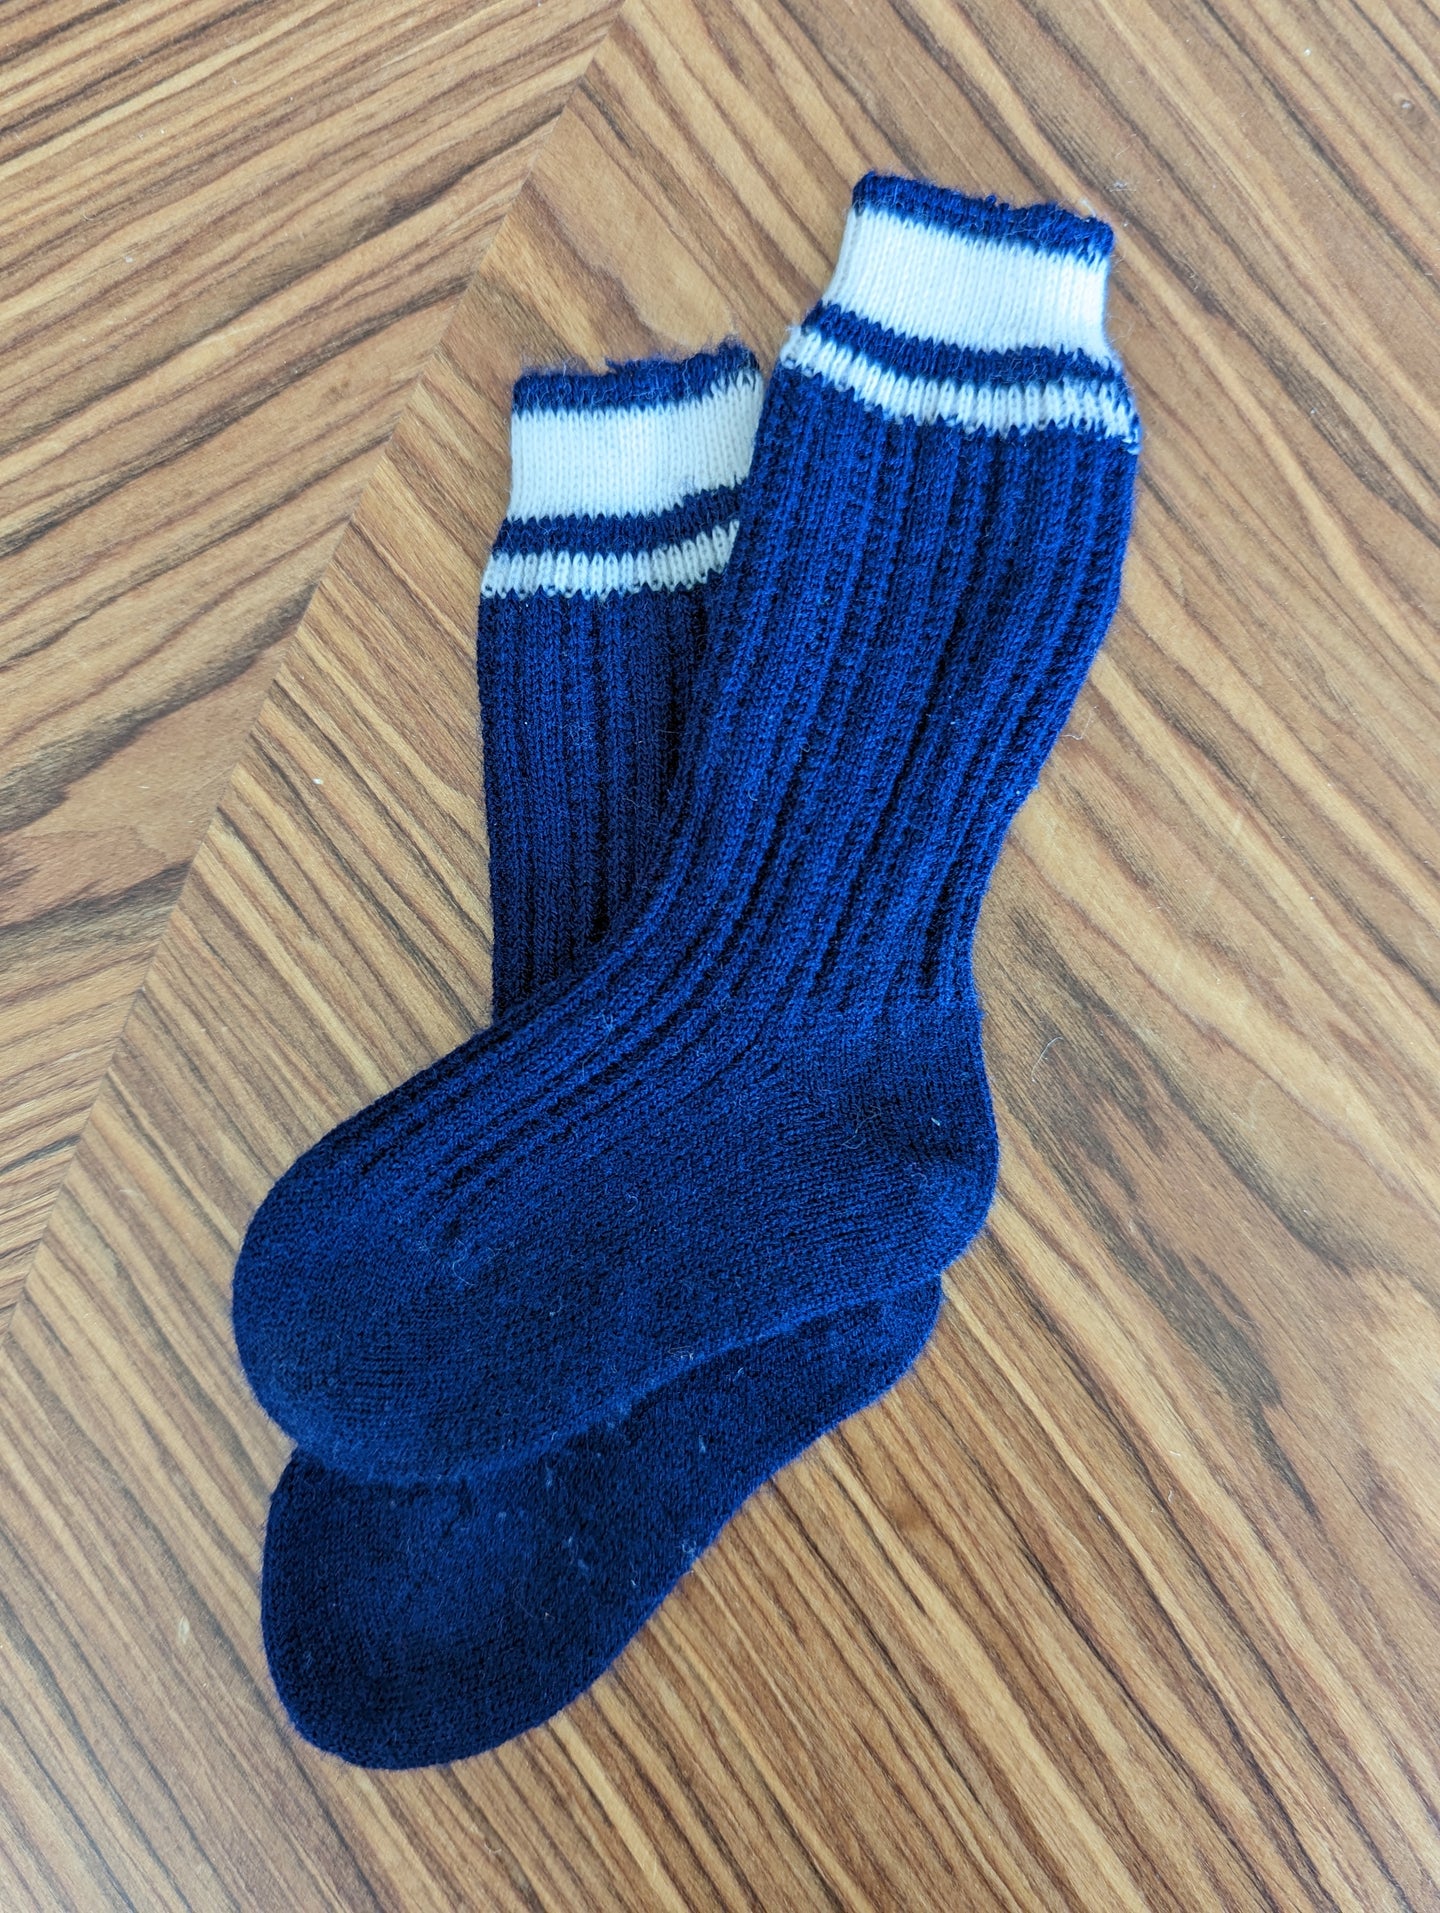 Old School Navy Socks - 3 Months